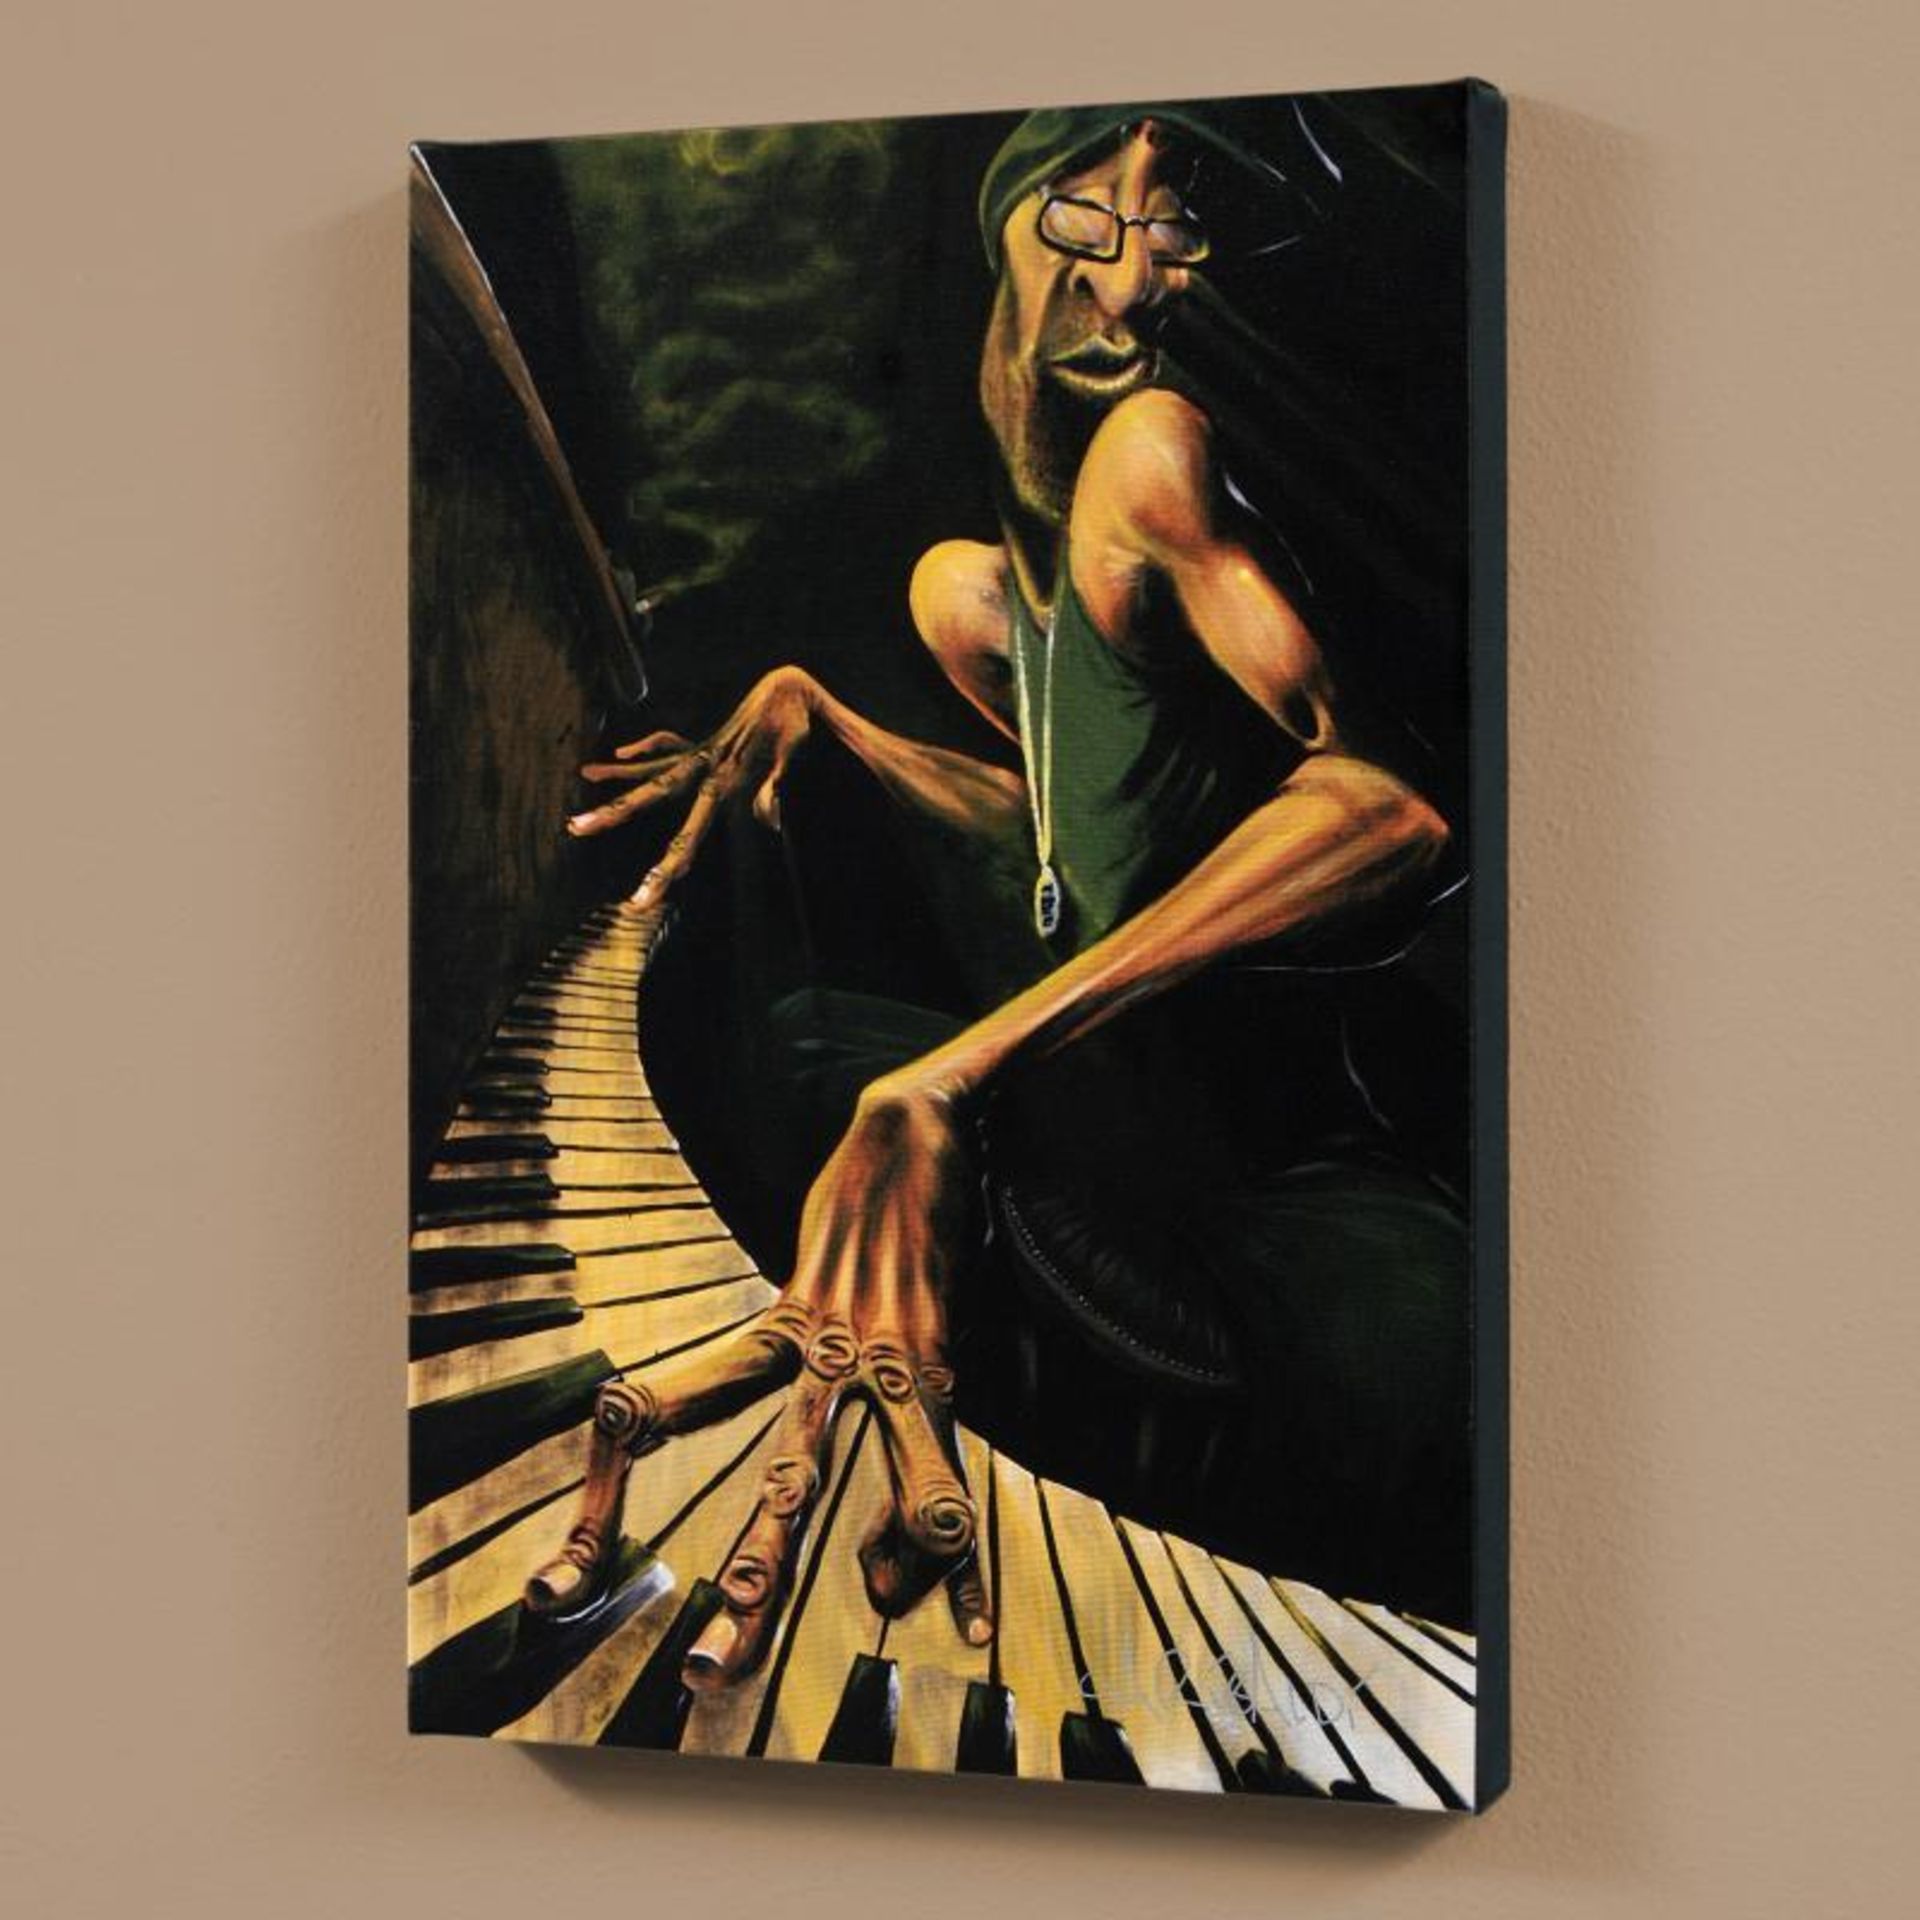 "Lounge Smoke" Limited Edition Giclee on Canvas (24" x 36") by David Garibaldi, - Image 2 of 2